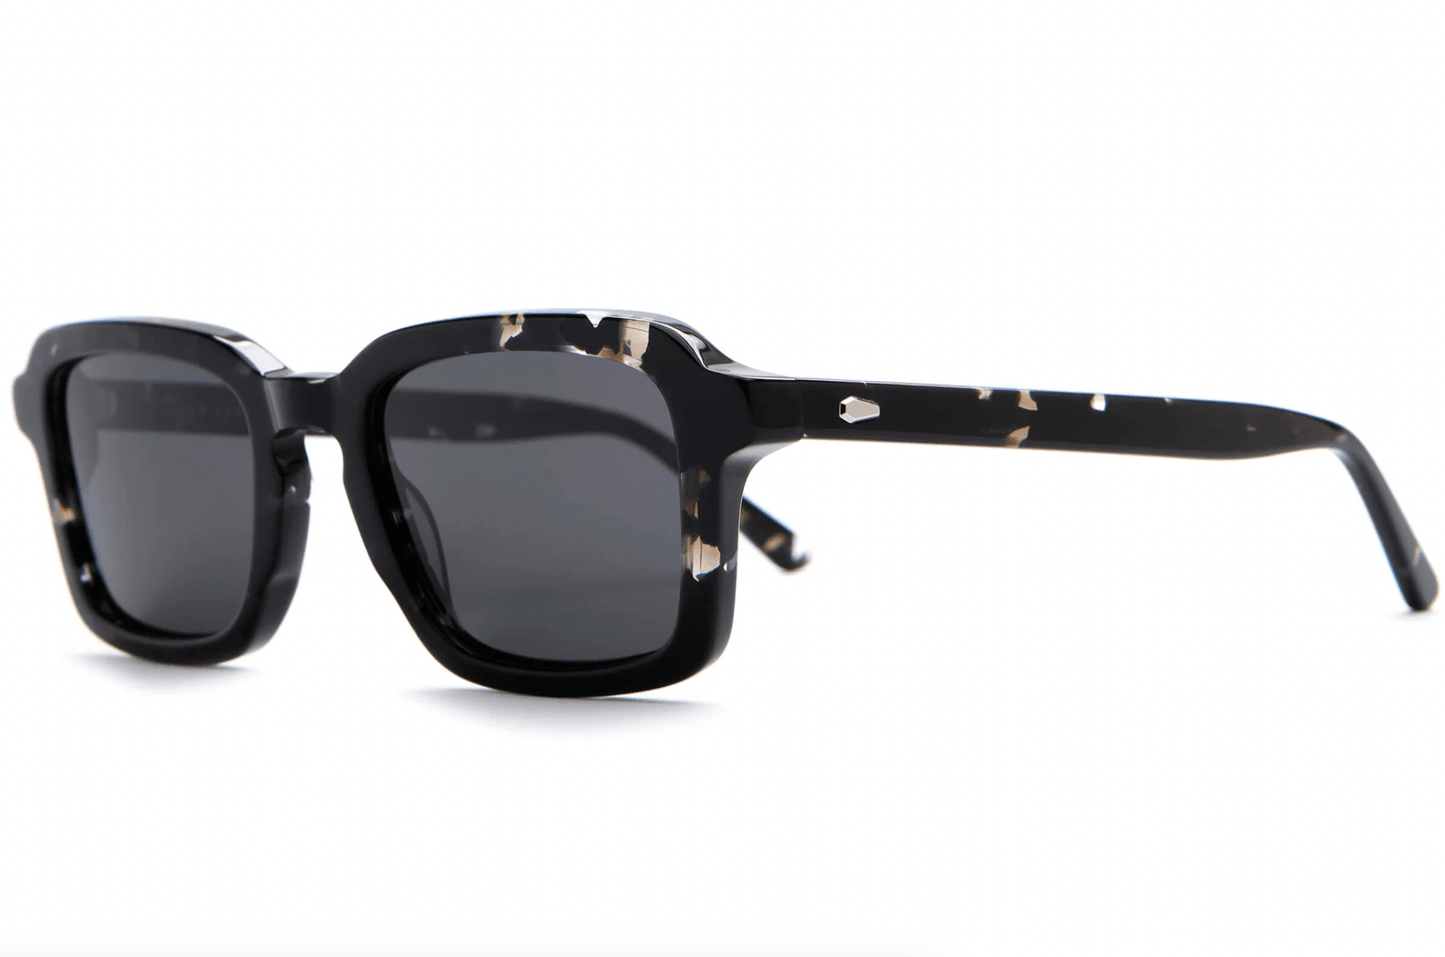 The Heavy Tropix Sunglasses by Crap Eyewear